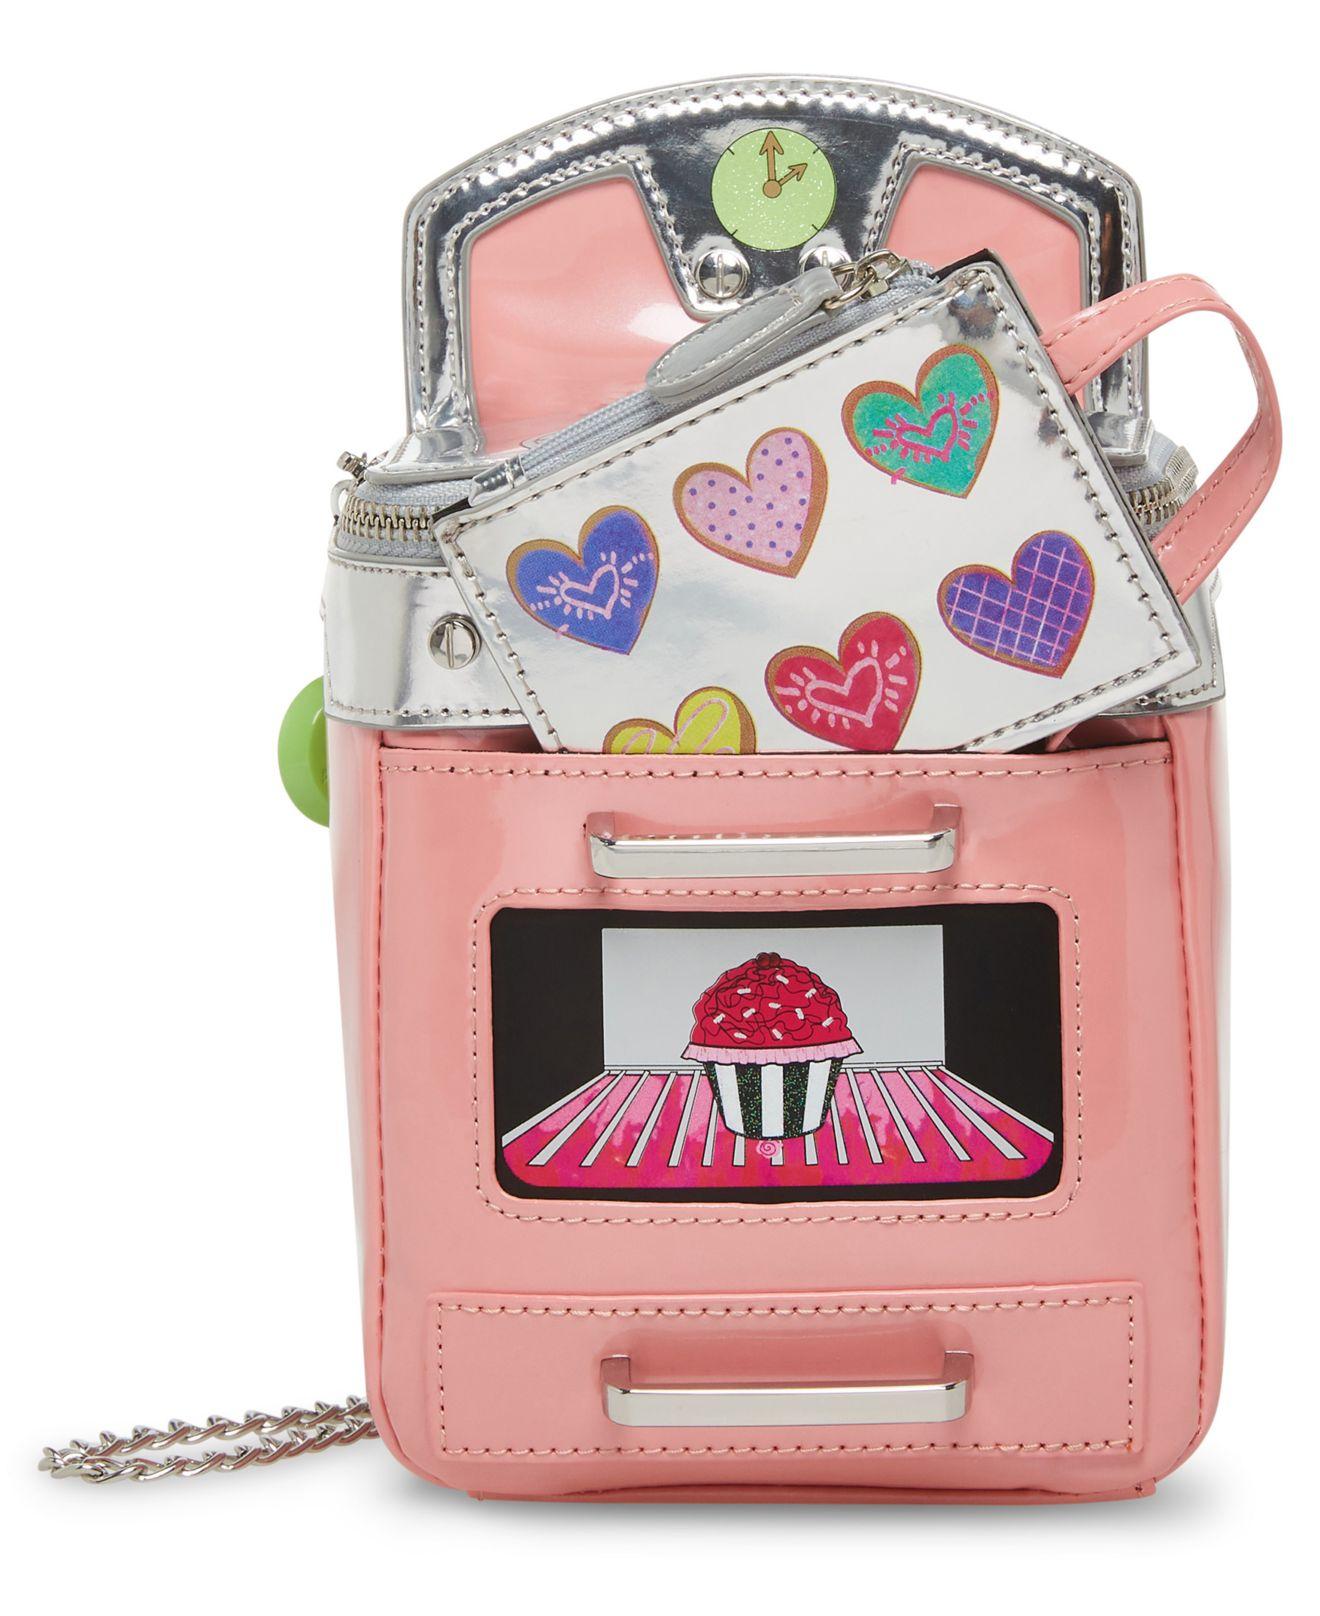 Buy Betsey Johnson Phone Bag Cross Body Handbag,Stripe at Amazon.in